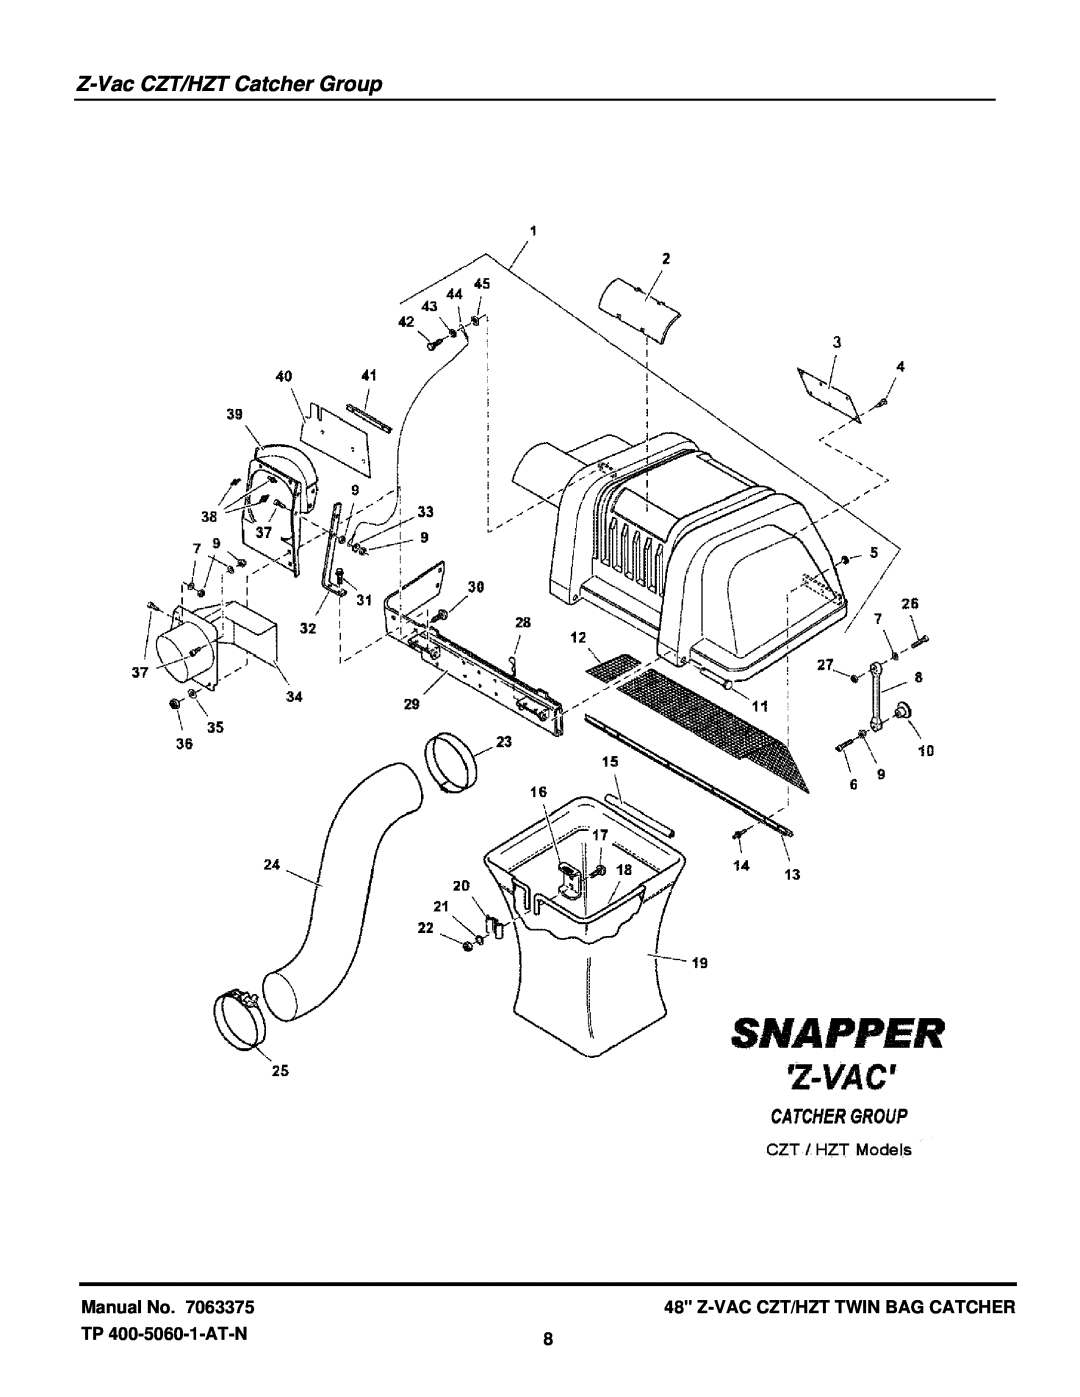 Snapper 7063375 manual Z-Vac CZT/HZT Catcher Group, Manual No, Z-Vac Czt/Hzt Twin Bag Catcher, TP 400-5060-1-AT-N 